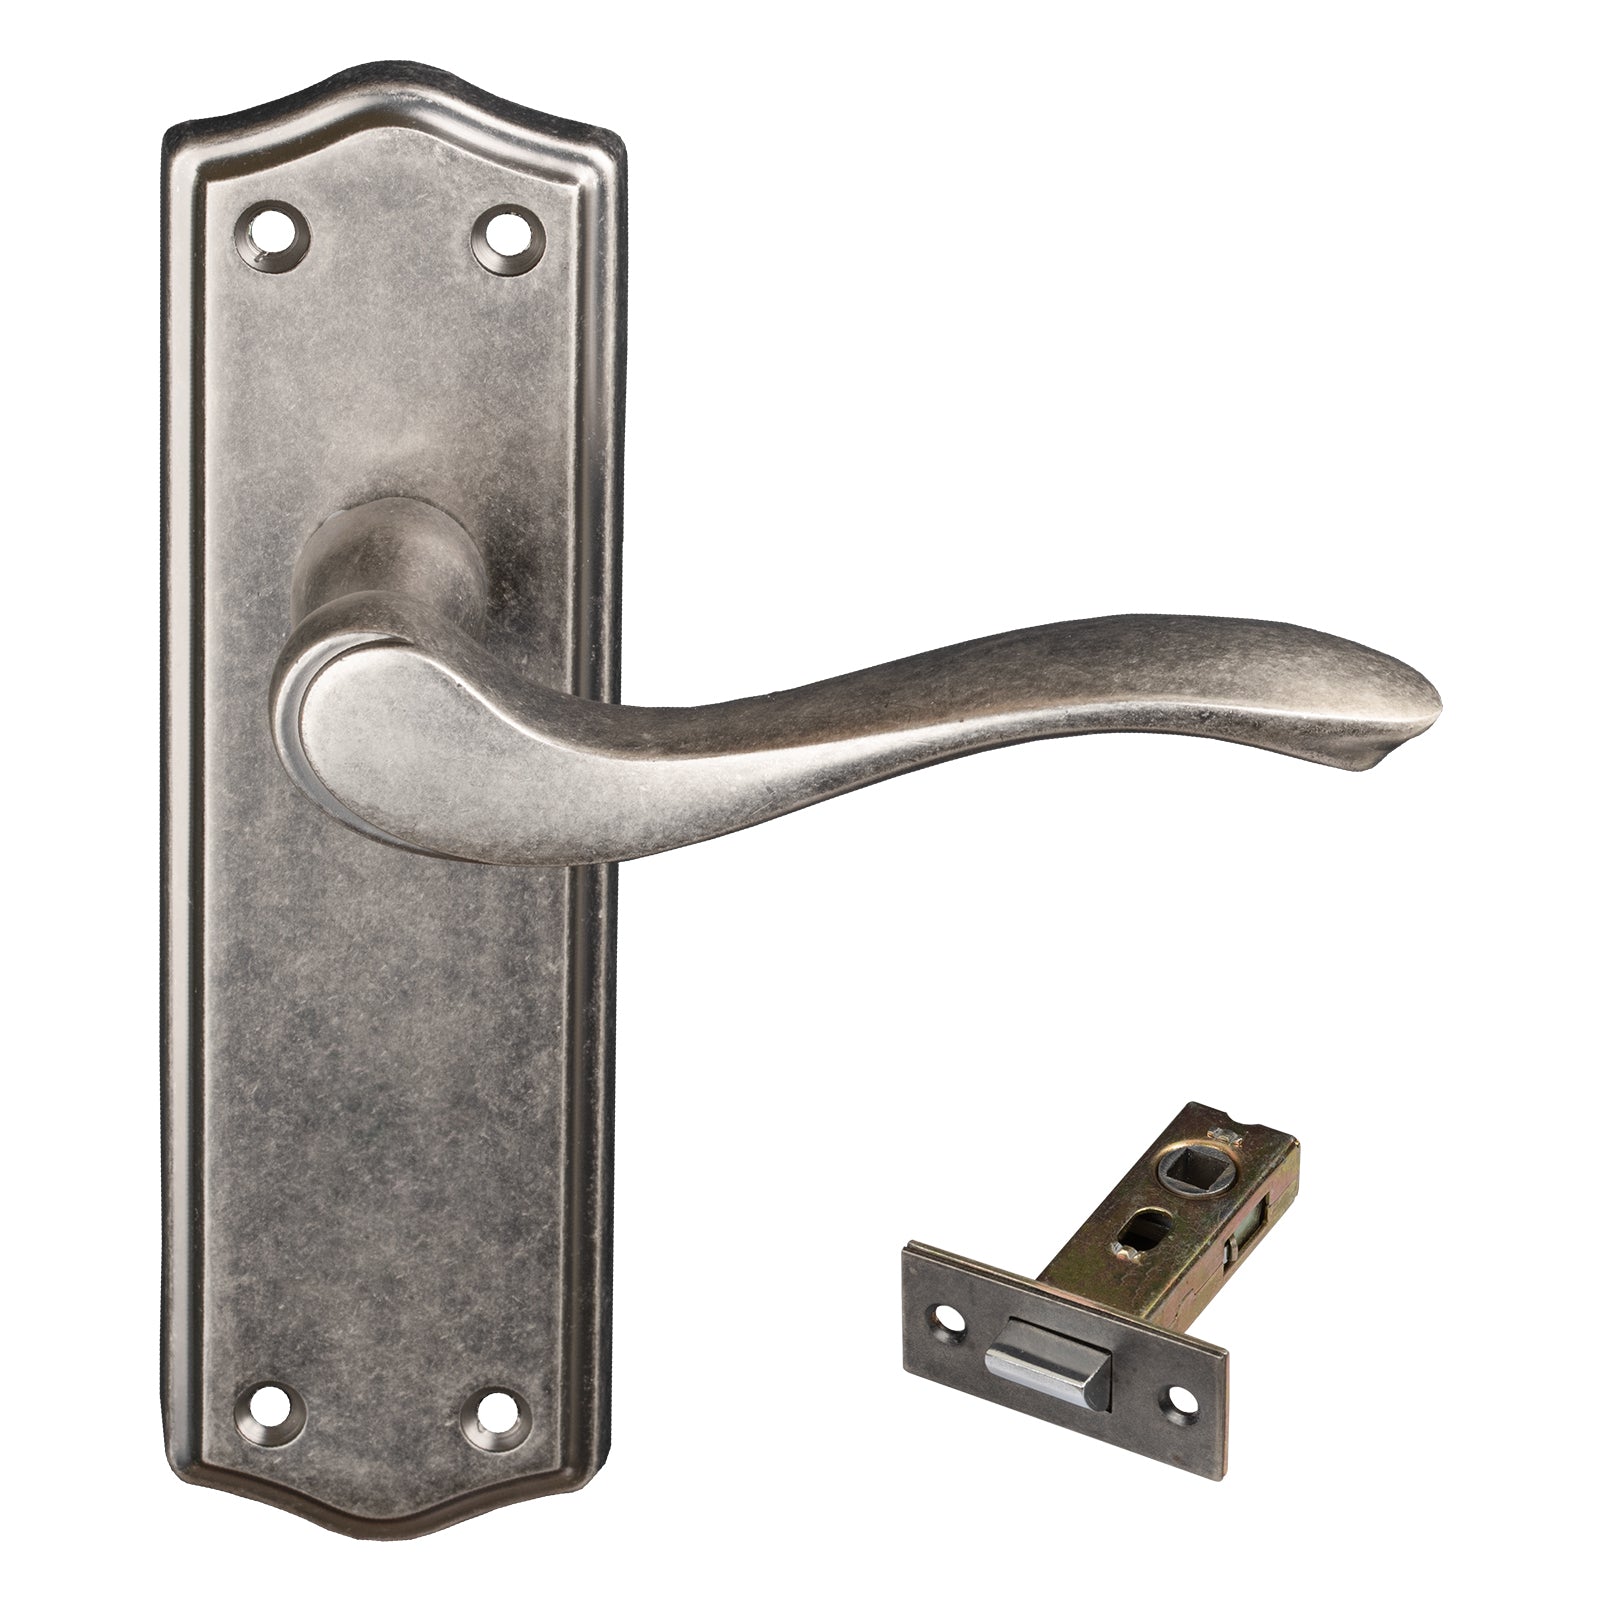 Old English door handle latch set